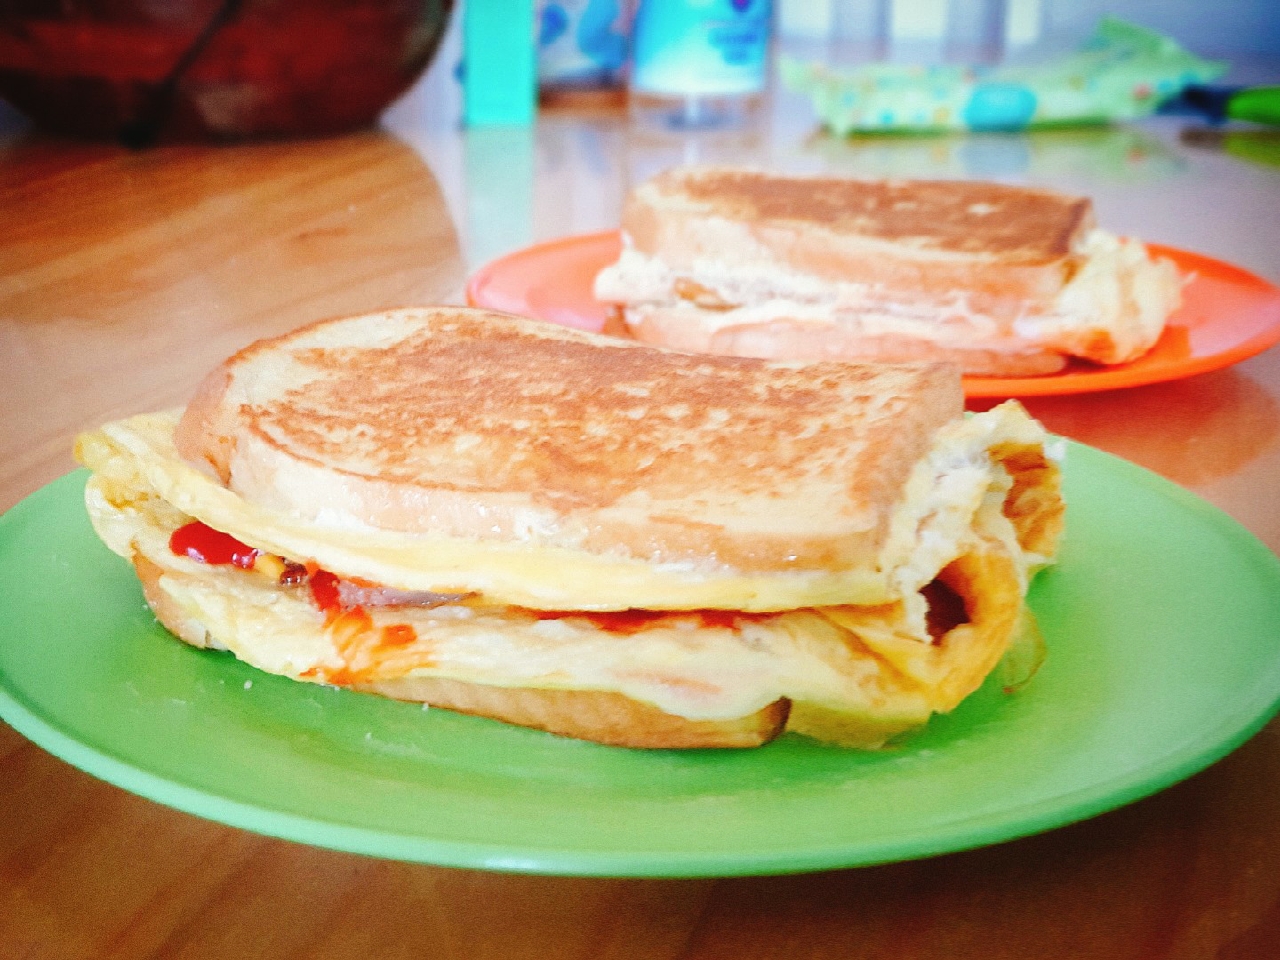 Egg toast with mozzarella cheese, bacon and sauce.